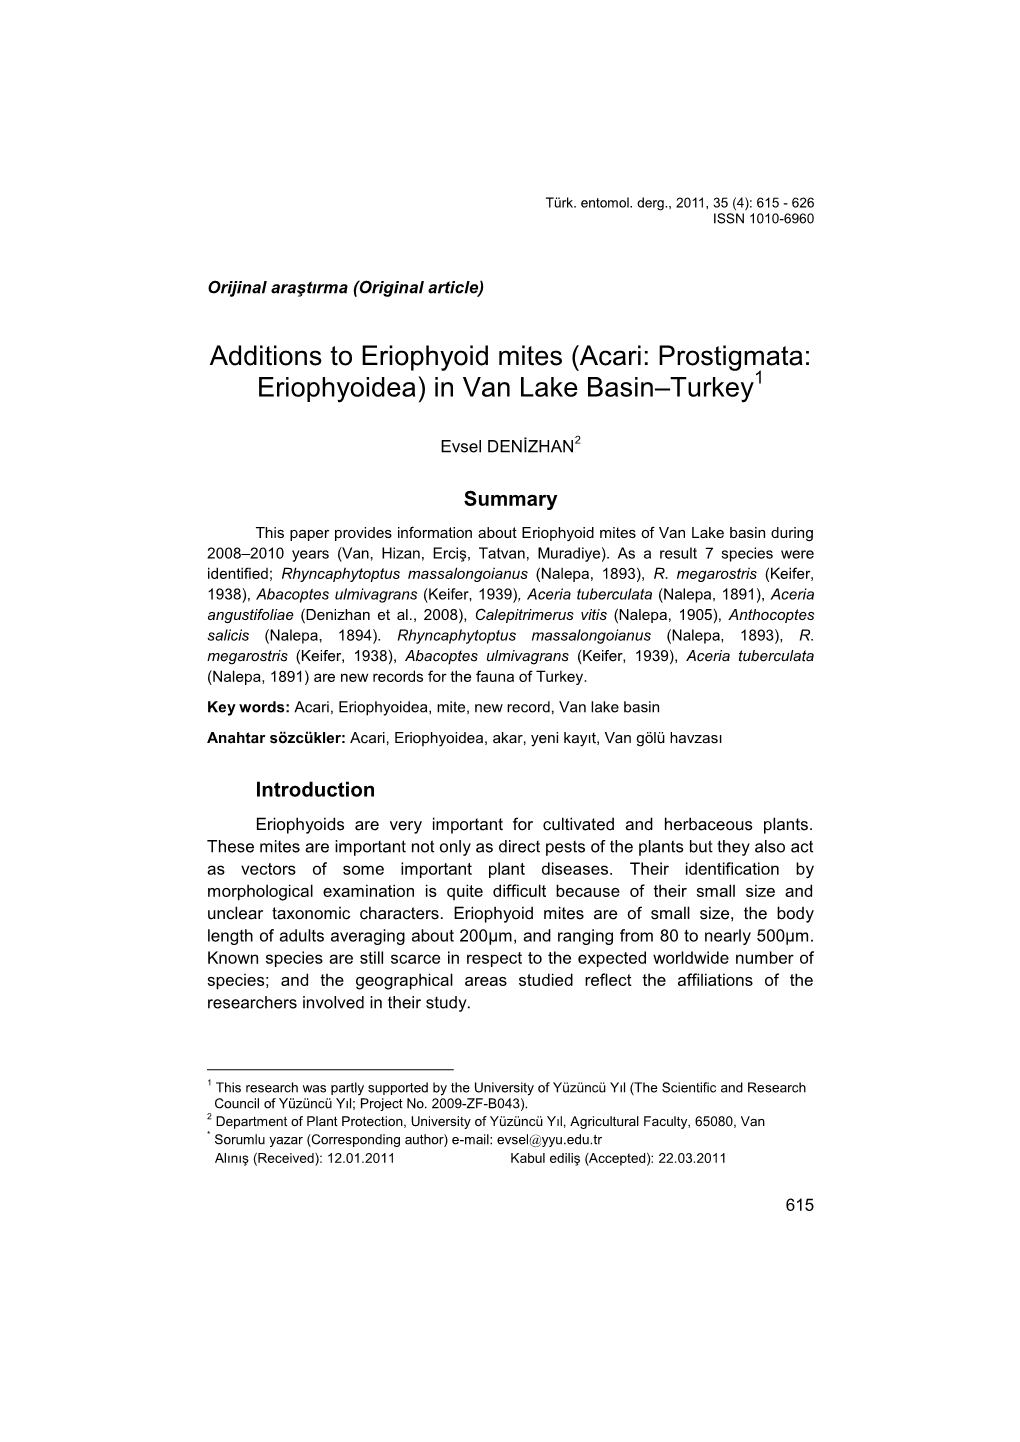 Additions to Eriophyoid Mites (Acari: Prostigmata: Eriophyoidea) in Van Lake Basin–Turkey1